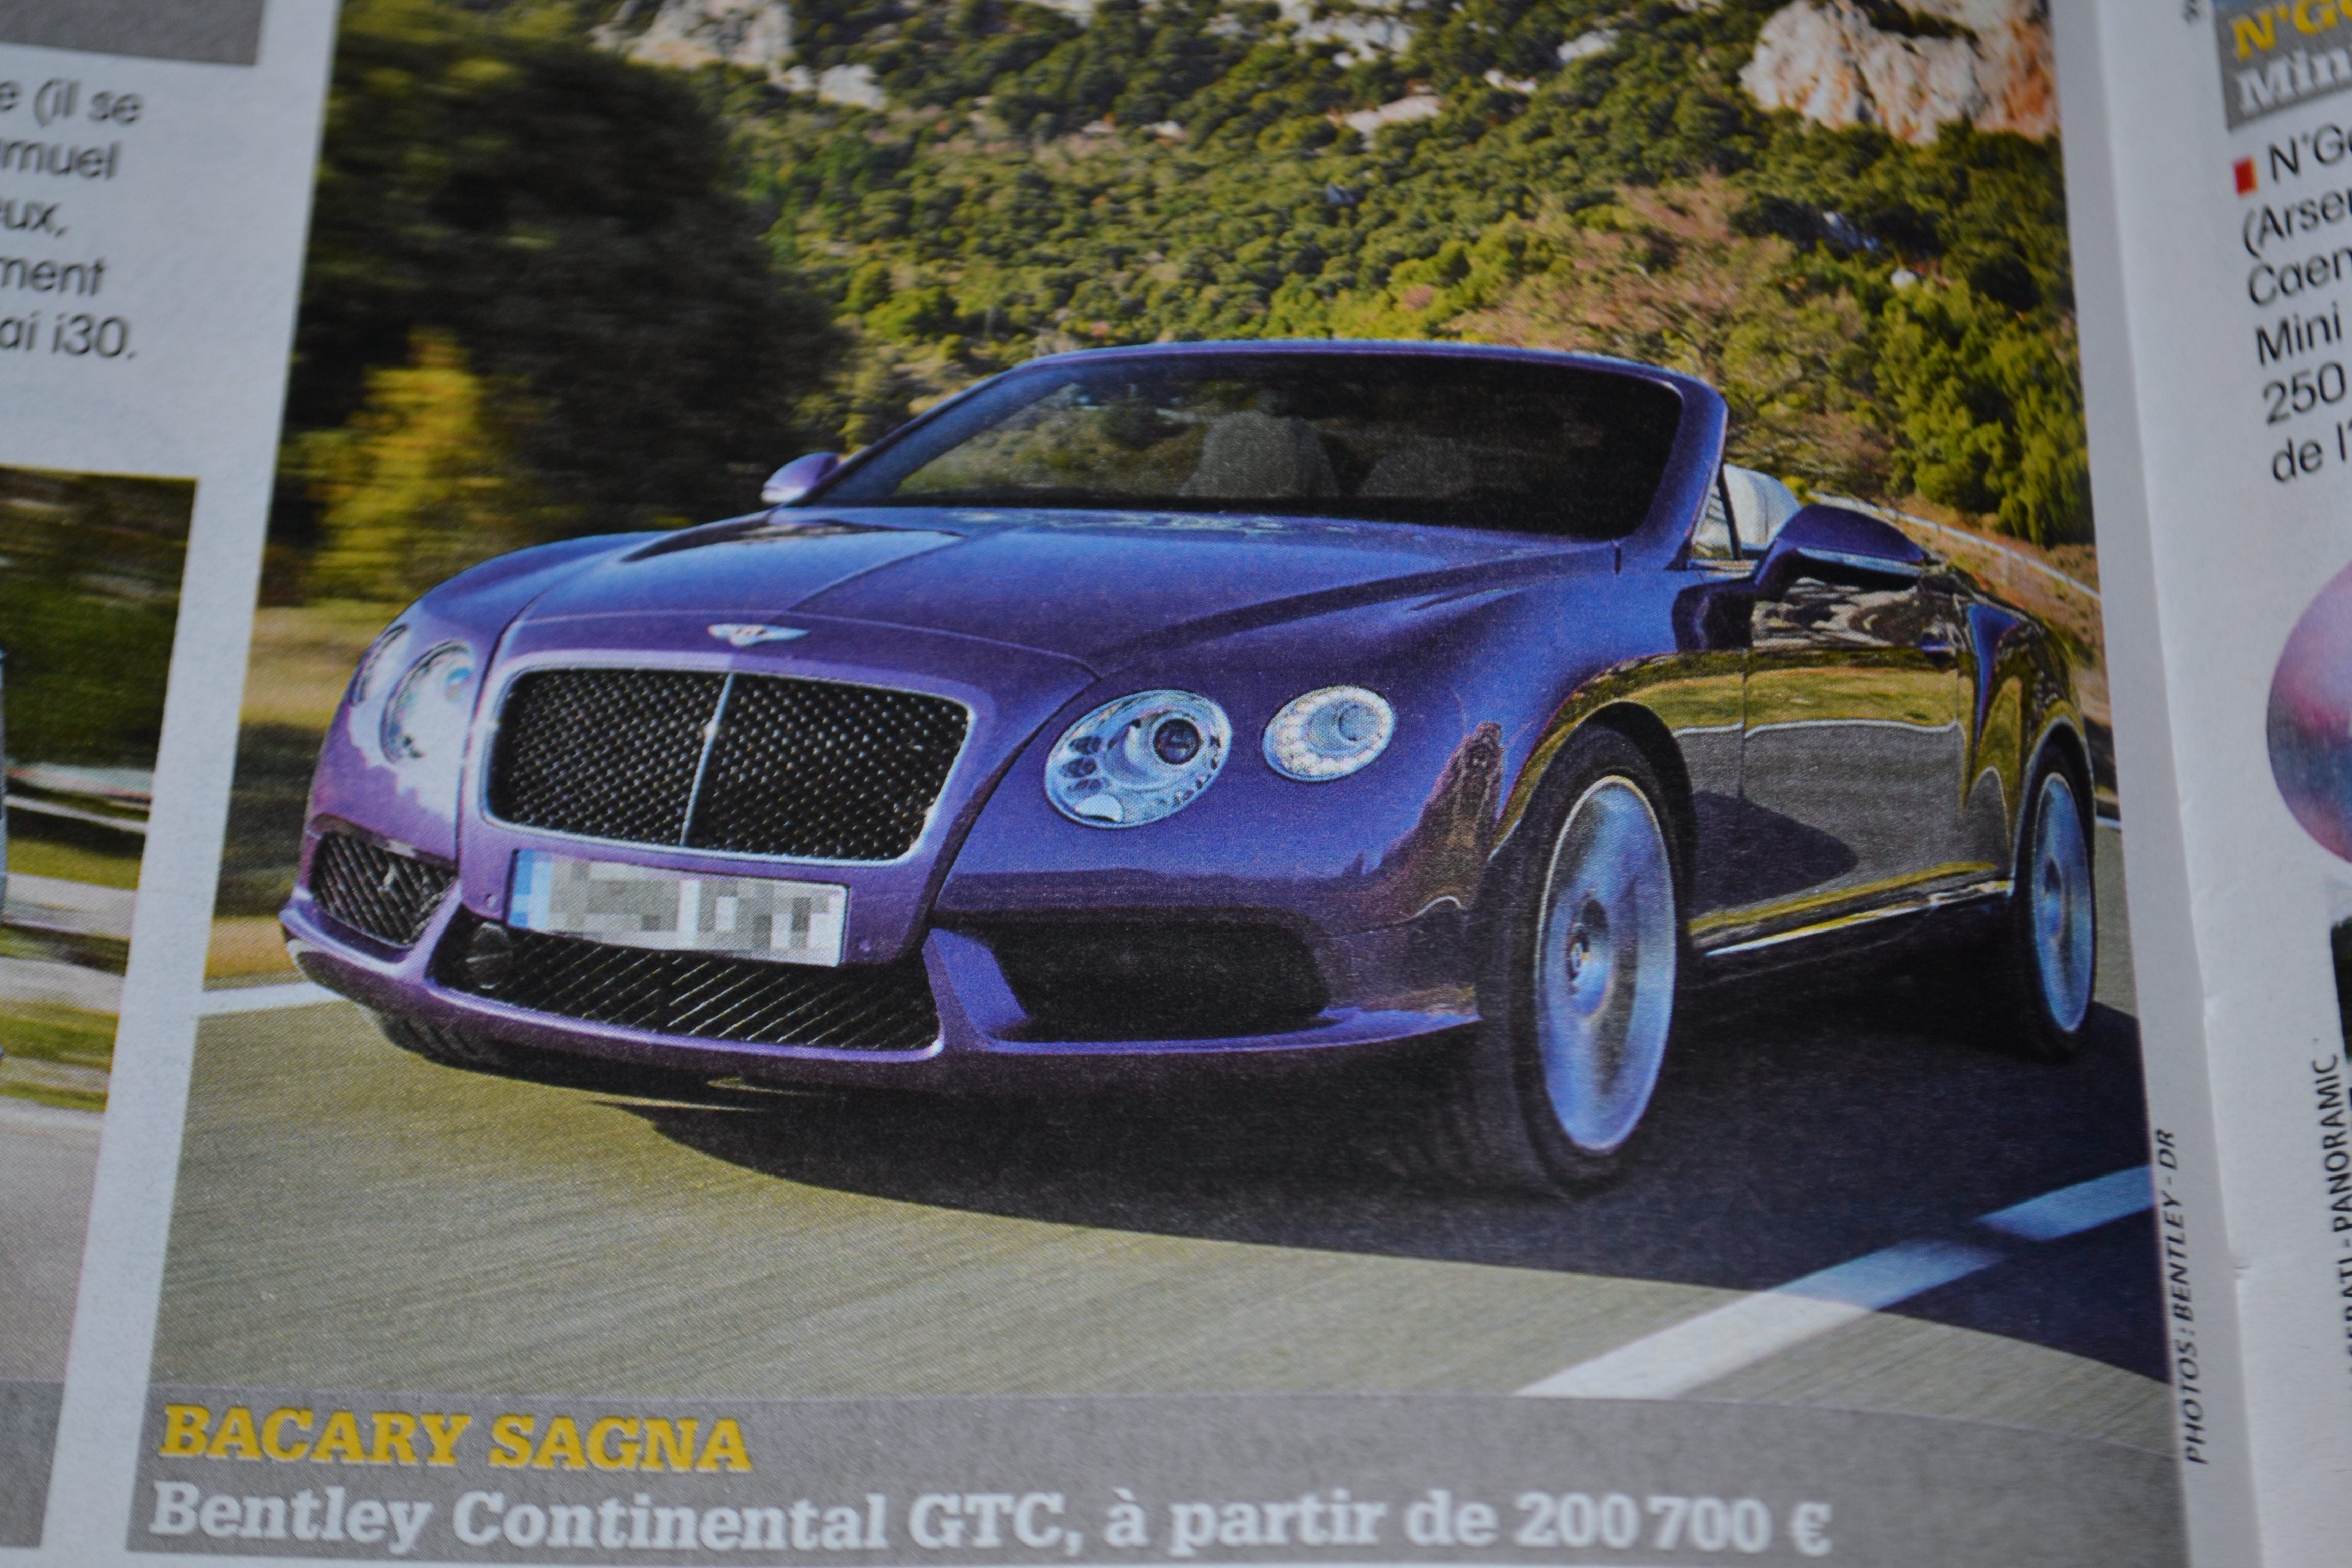 La Bentley décapotable de Bacary Sagna